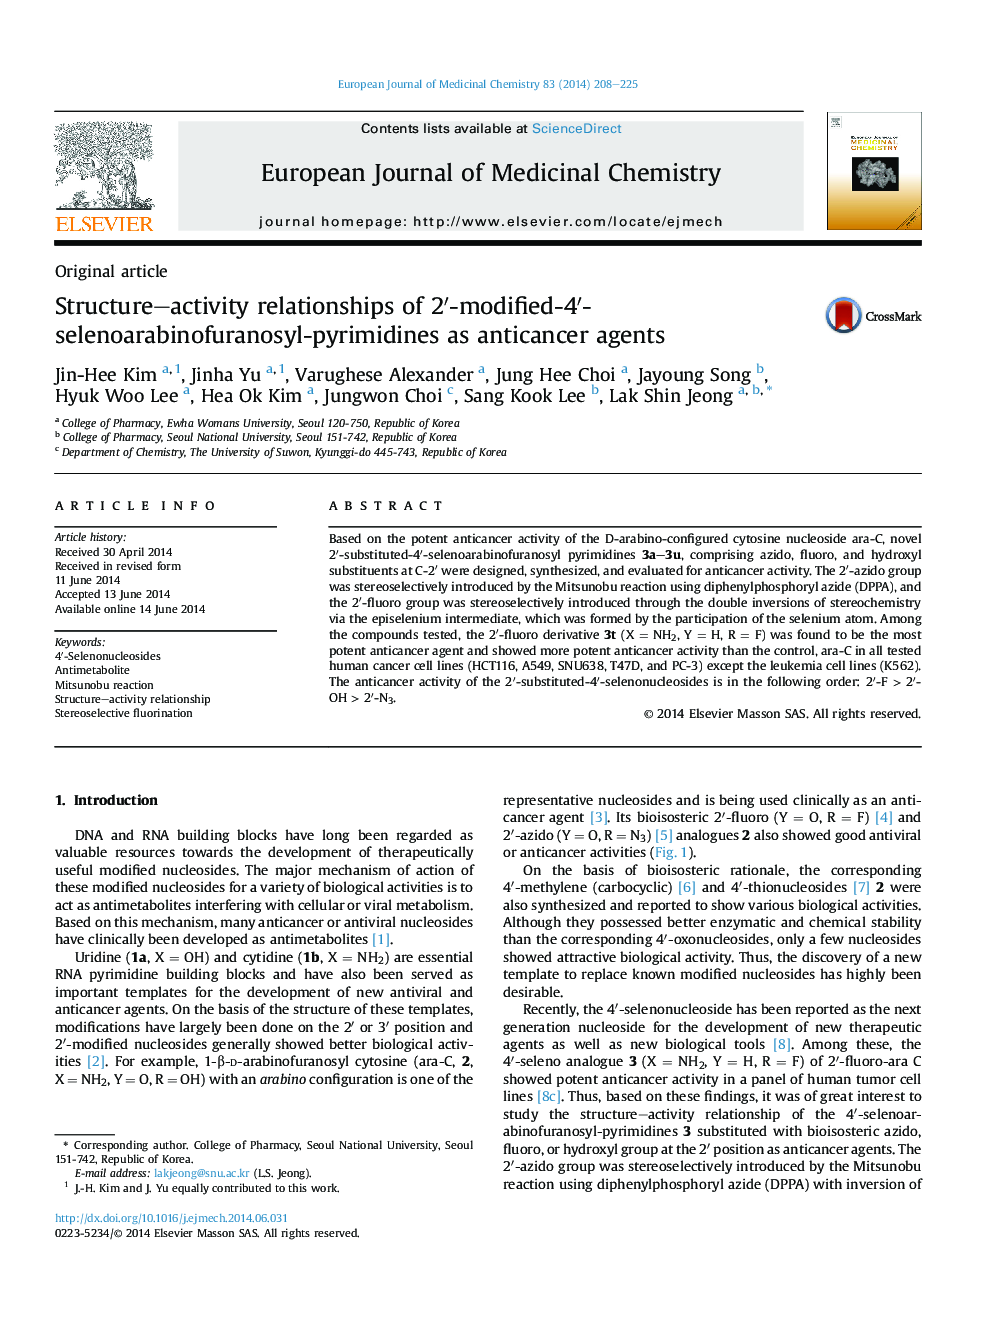 Structure–activity relationships of 2′-modified-4′-selenoarabinofuranosyl-pyrimidines as anticancer agents